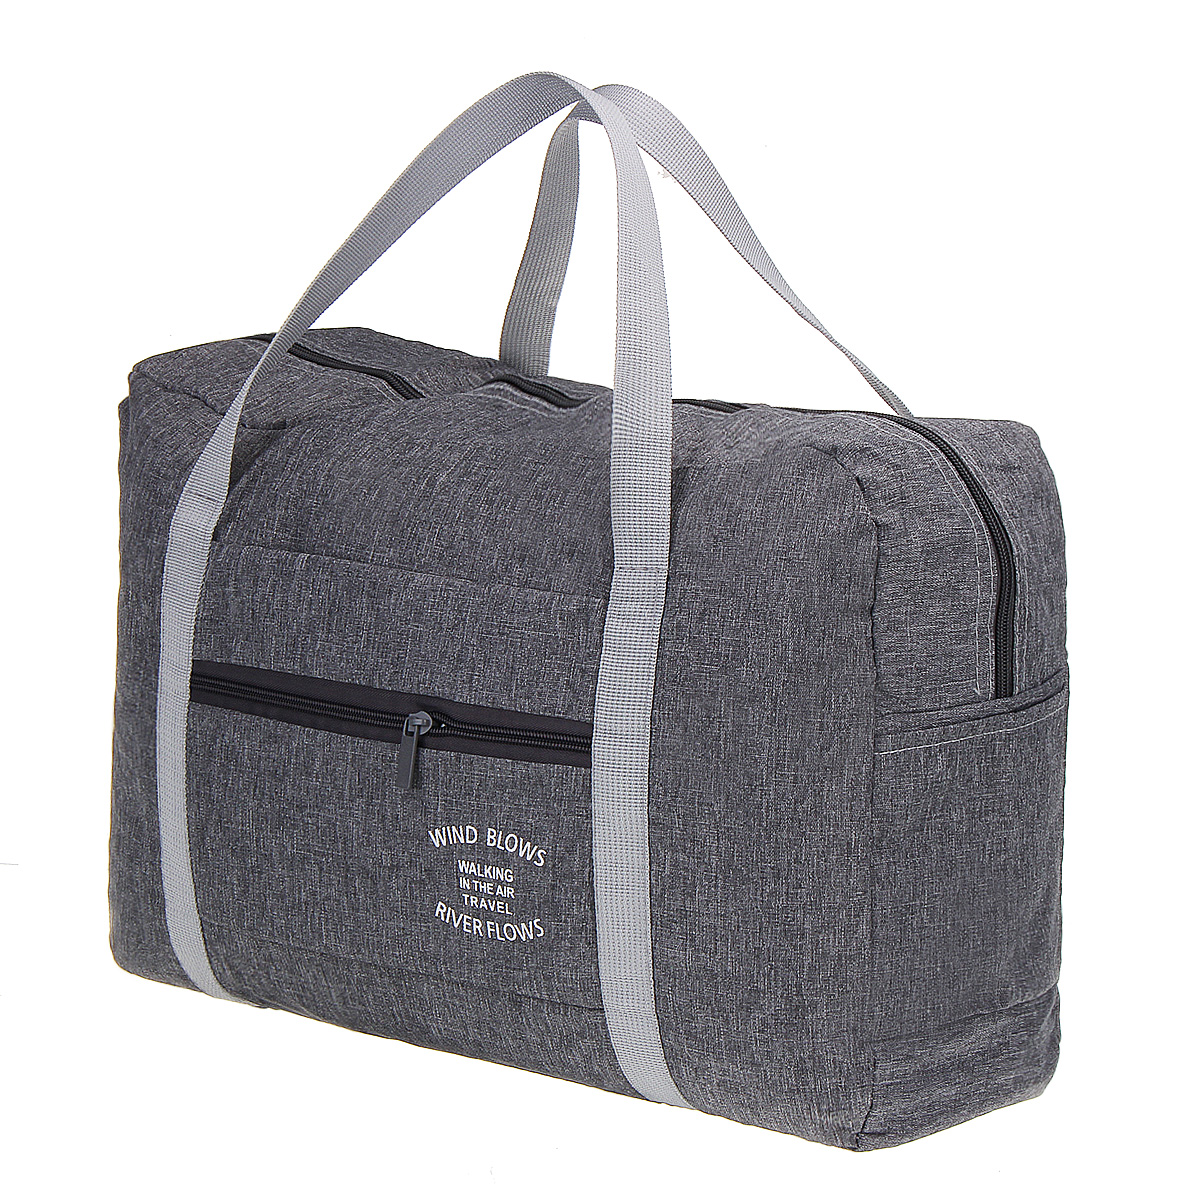 Oxford-Cloth-40x30x13cm-Foldable-Travel-Storage-Bag-Waterproof--Luggage-Bag-Hand-Shoulder-Bag-Carry--1667293-3